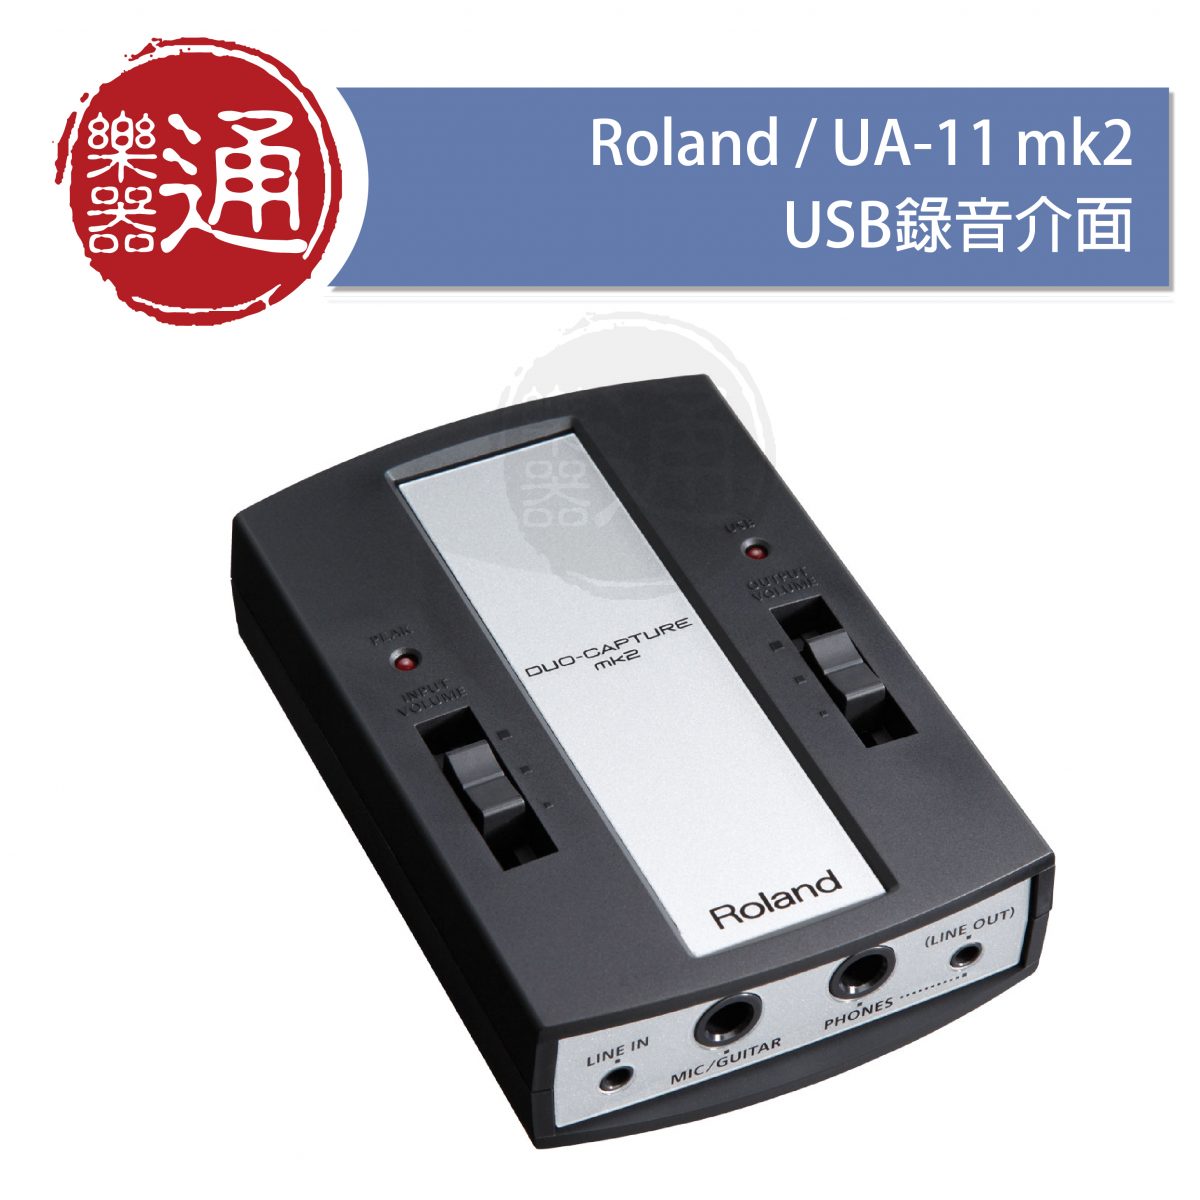 Roland / UA-11 MK2 USB錄音介面